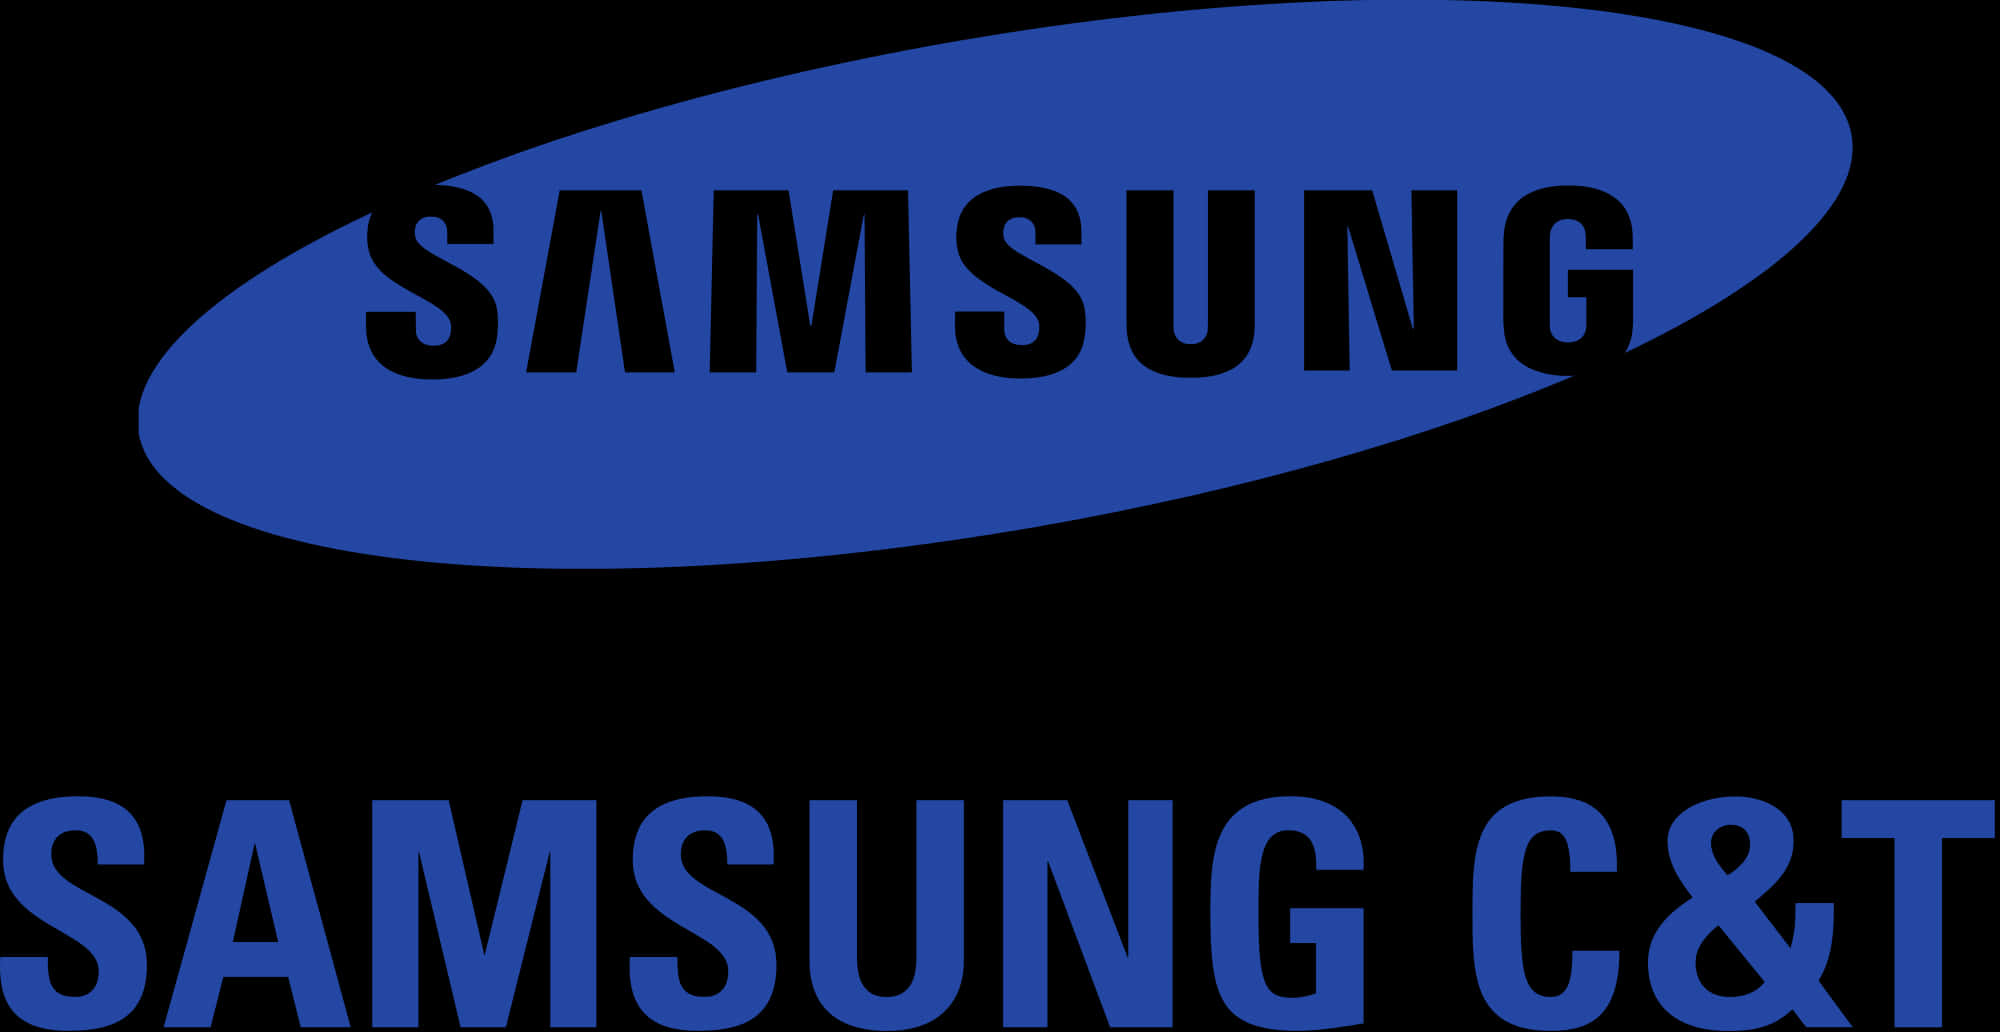 Samsung Logos Comparison PNG image